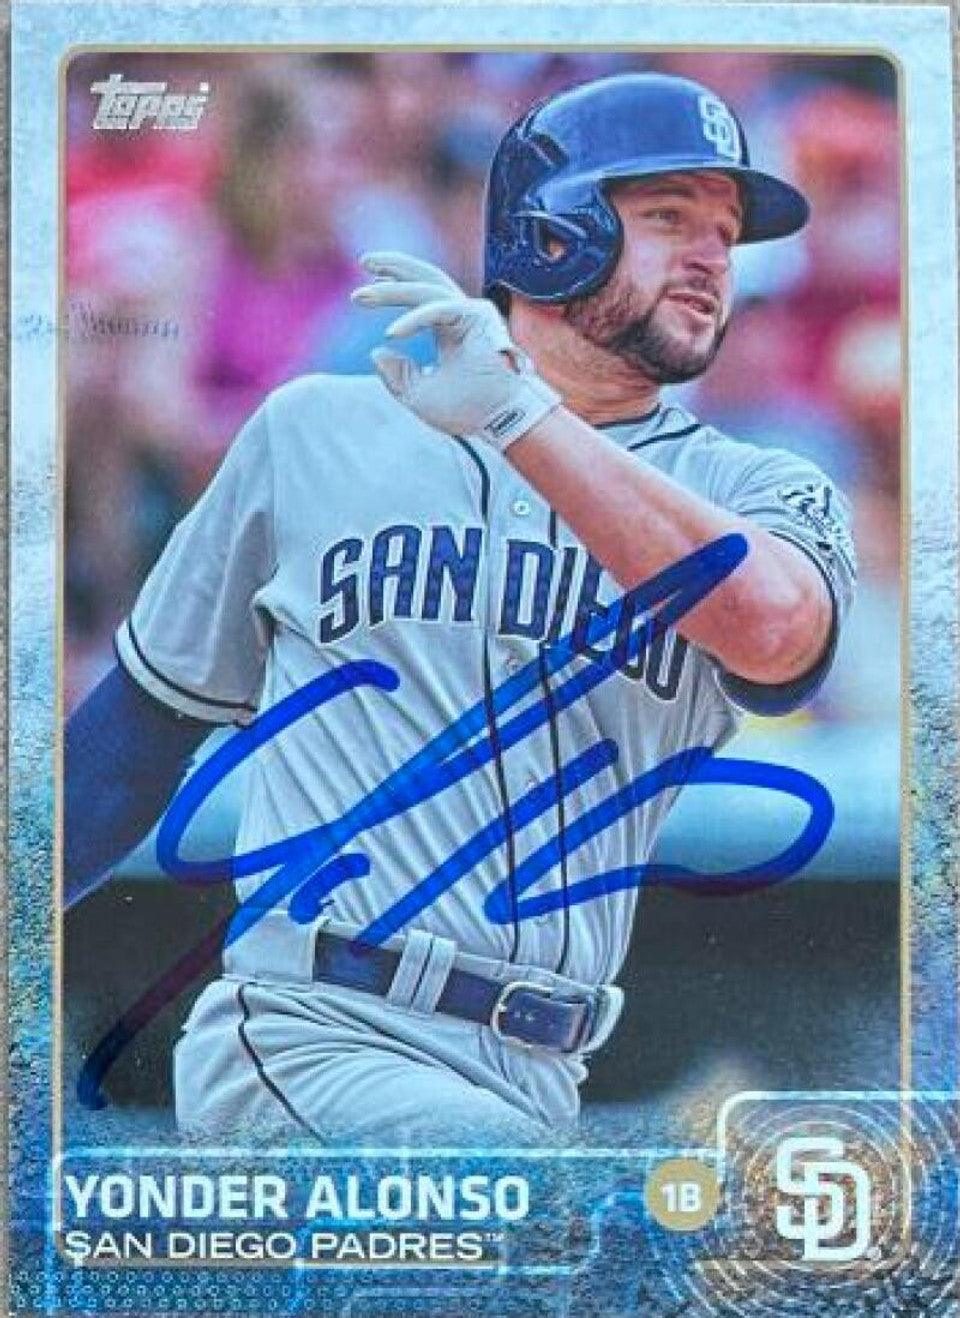 Yonder Alonso Signed 2015 Topps Baseball Card -San Diego Padres - PastPros